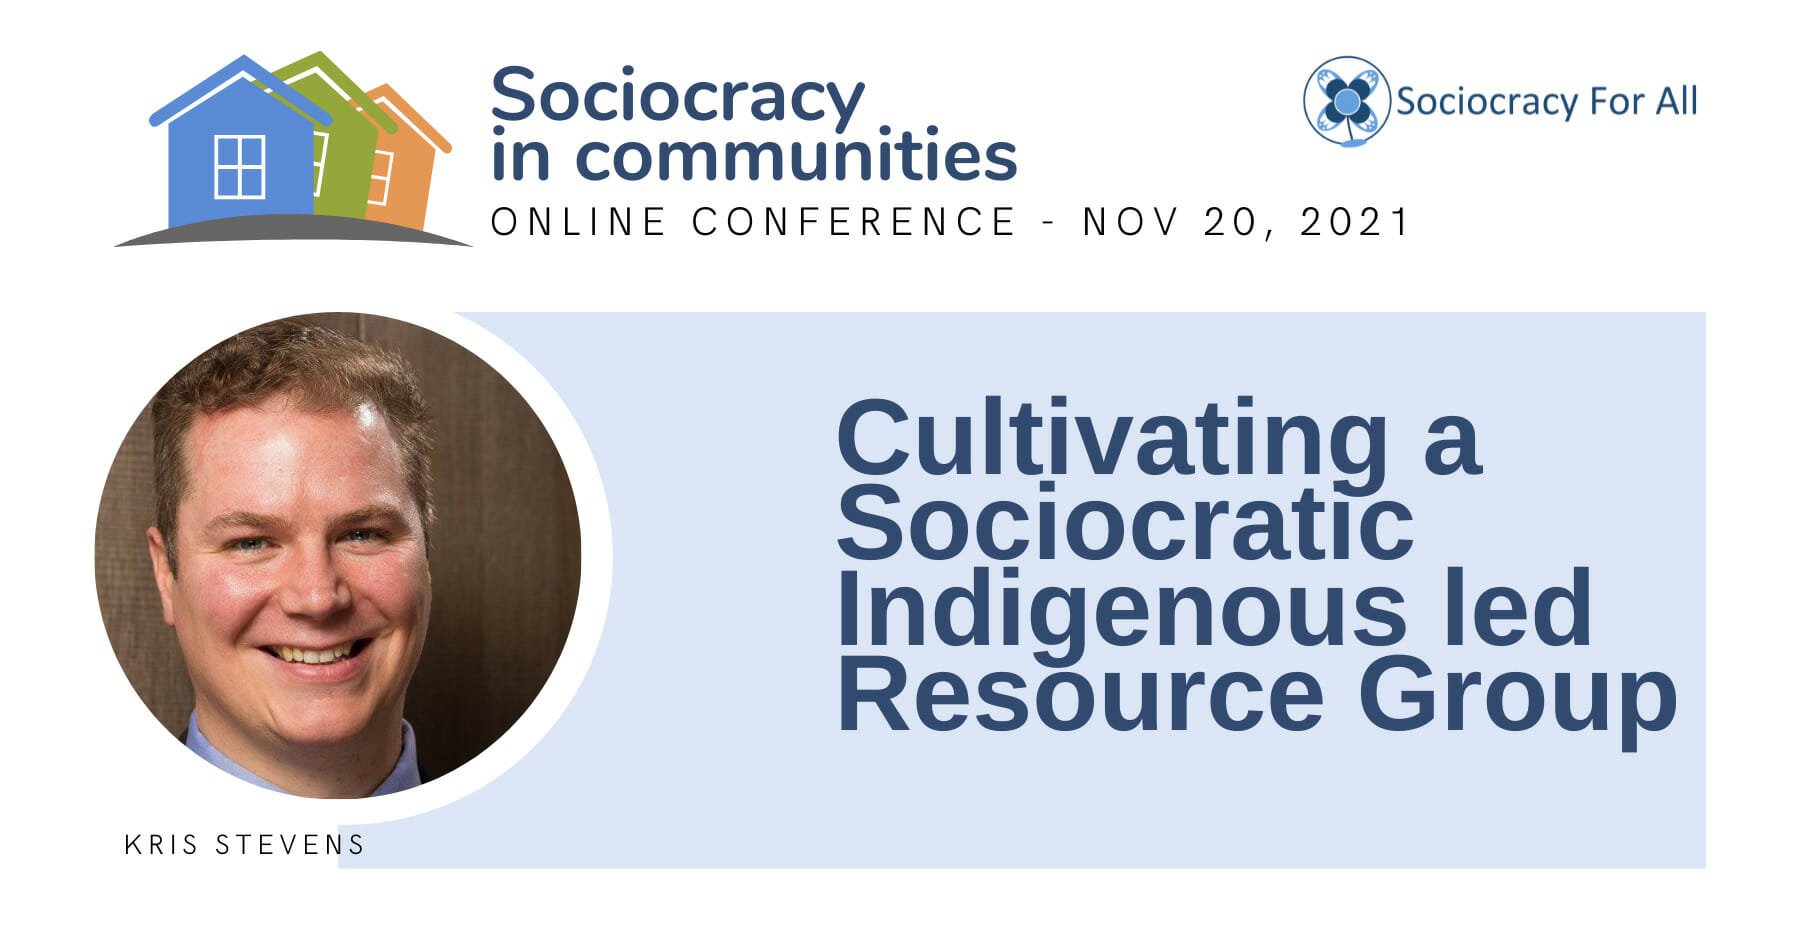 Cultivating a Sociocratic Indigenous led Resource Group (Kris Stevens)